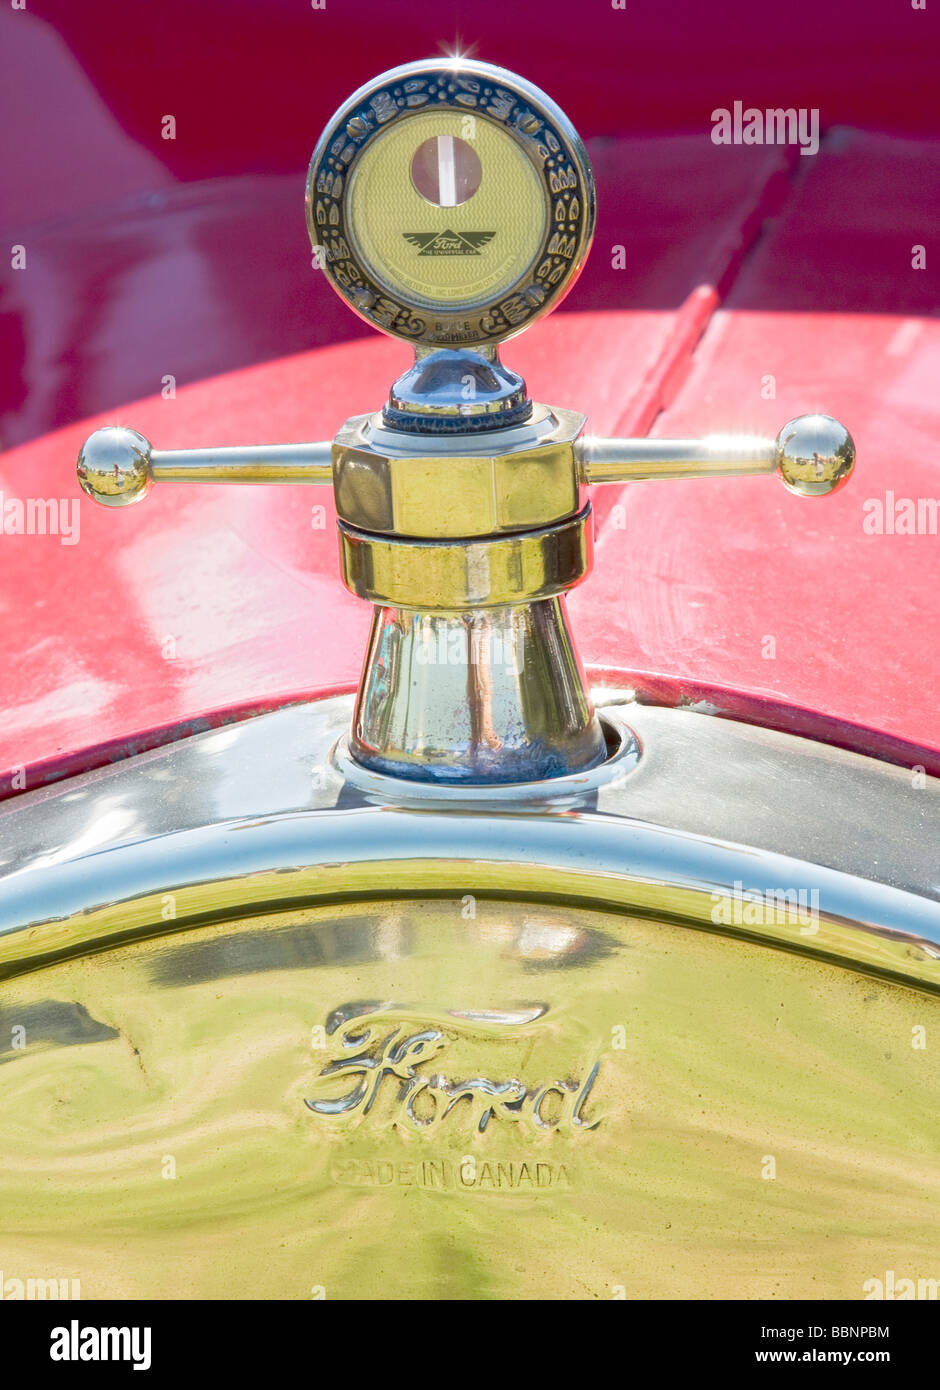 Grill badge vintage ford car -Fotos und -Bildmaterial in hoher